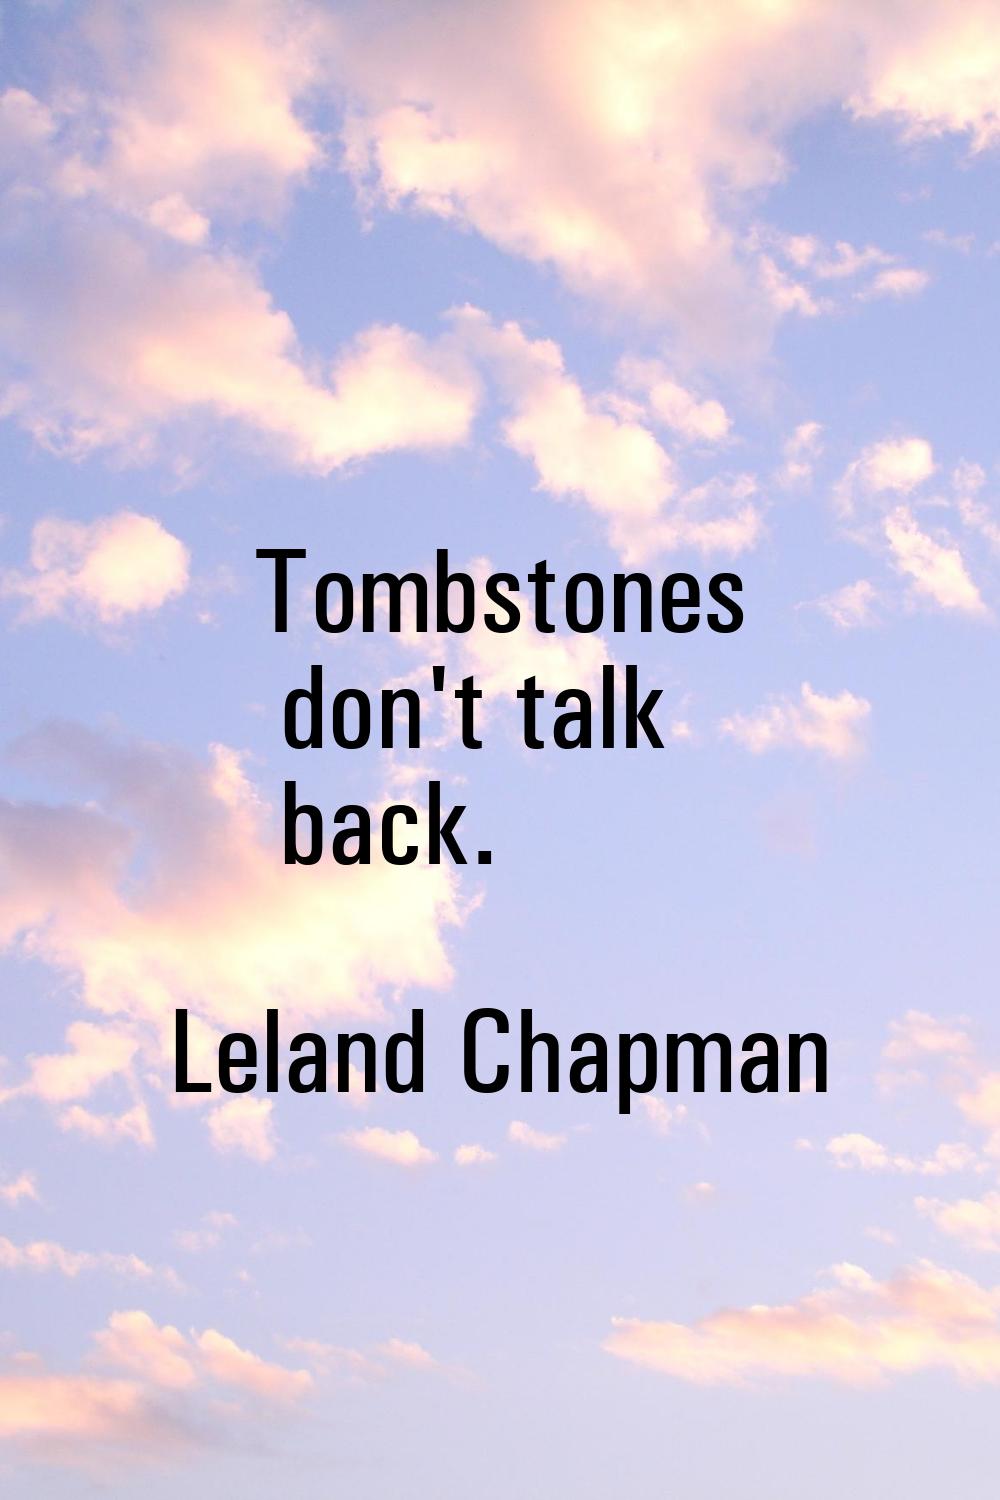 Tombstones don't talk back.